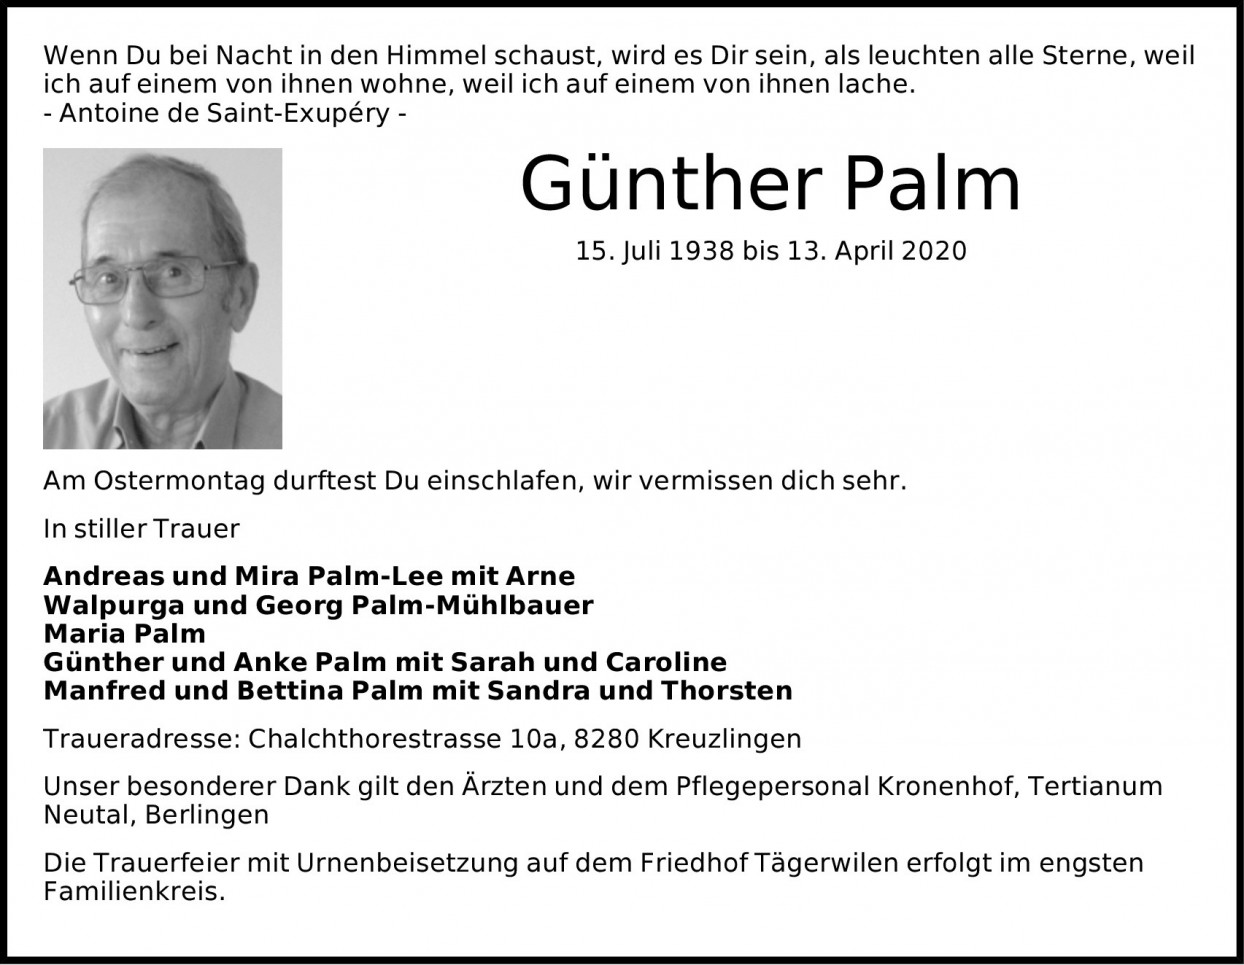 Günther Palm